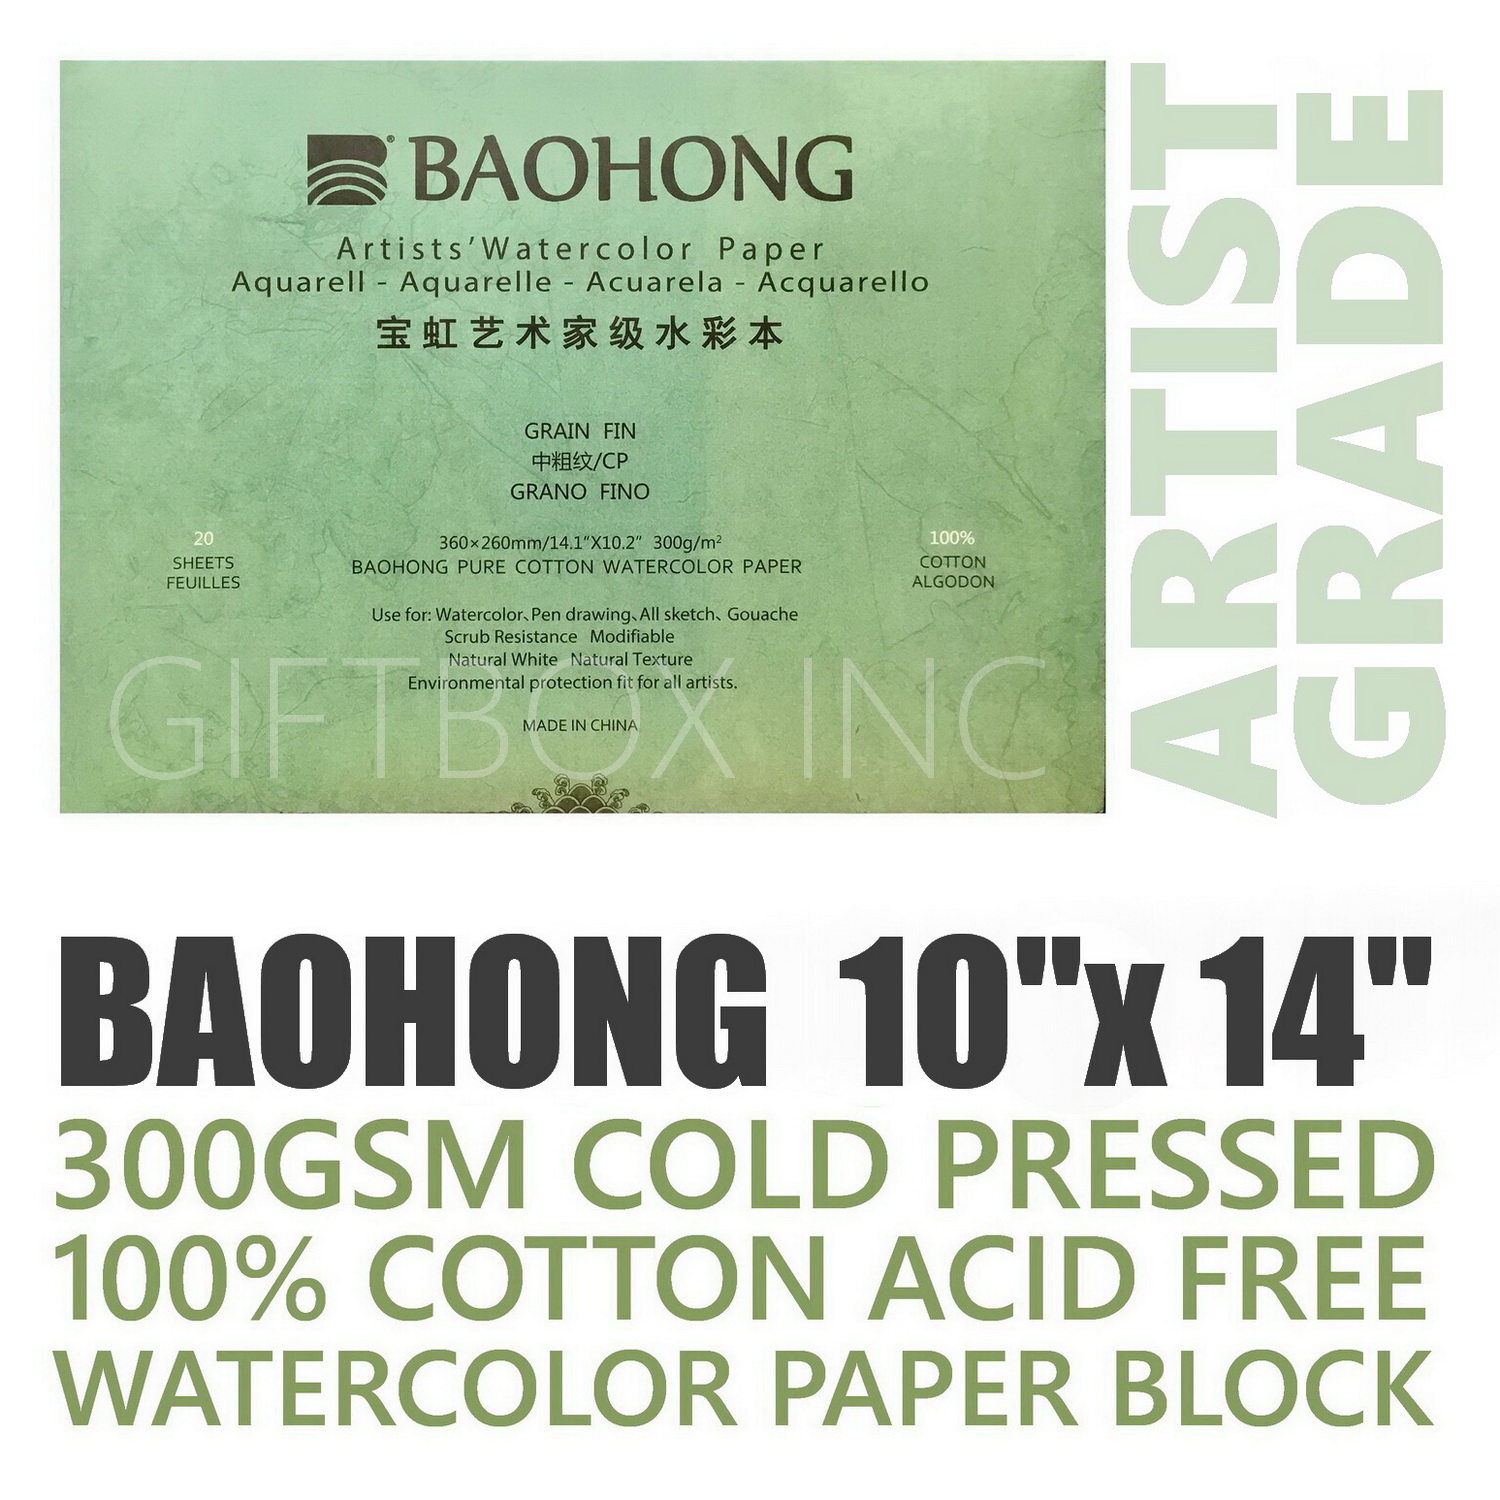 BAOHONG Artists' Watercolor Paper 100% Cotton, 140lb/300gsm, Watercolor  Block, 20 sheets